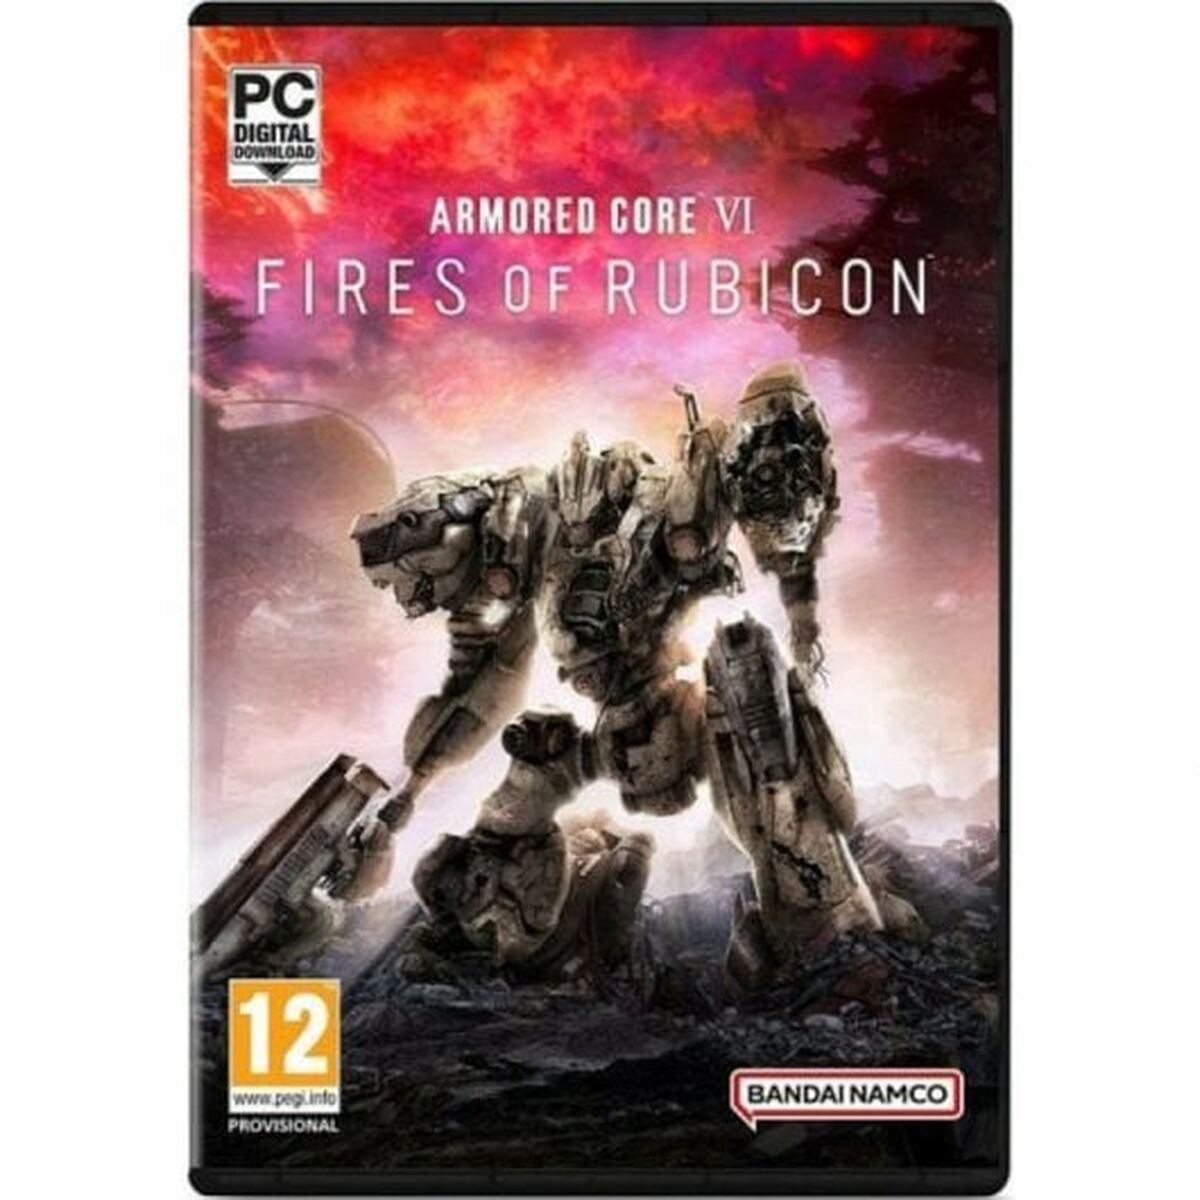 Jeu vidéo PC Bandai Namco Armored Core VI Fires of Rubicon Launch Edition